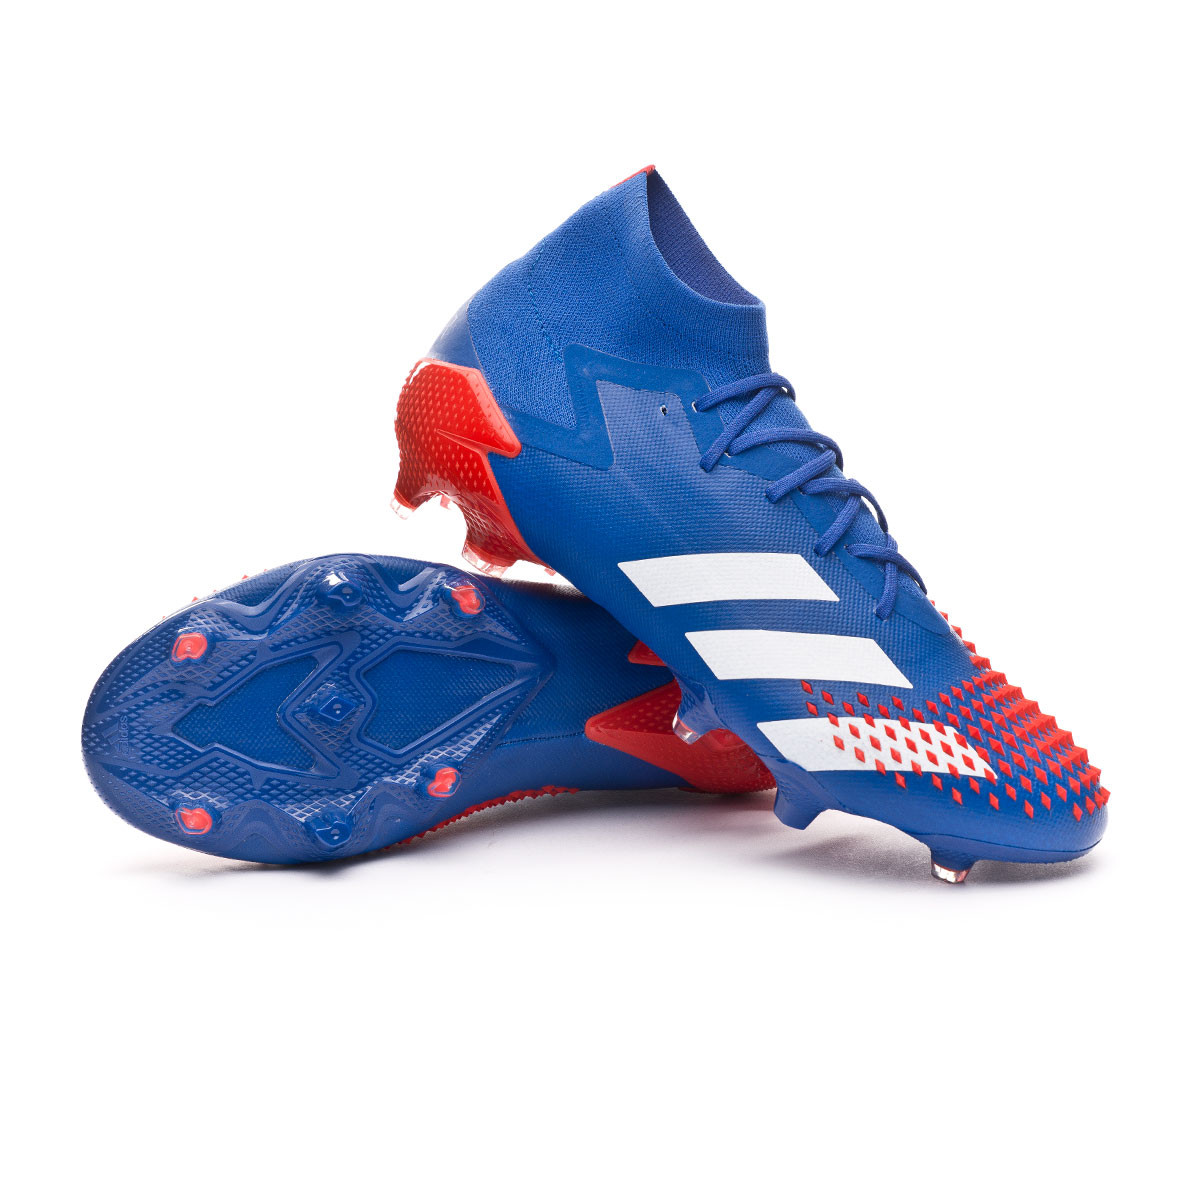 Adidas Predator Mutator 20.1 FG Football Boots Bazar.